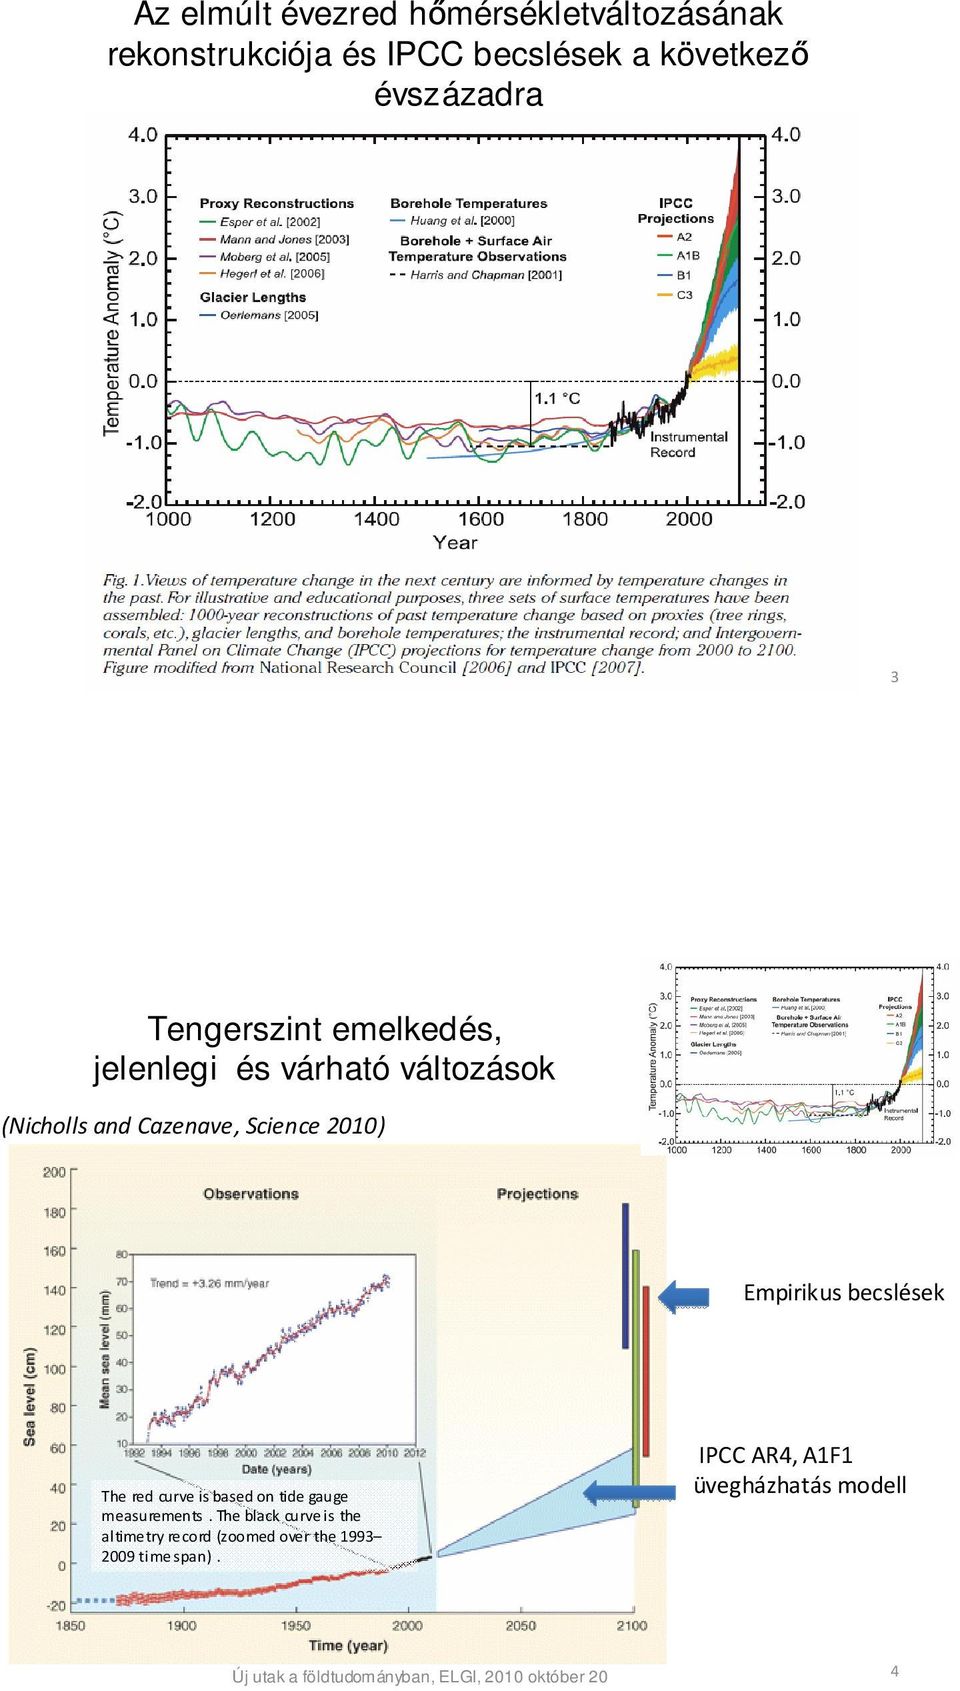 Science 2010) Empirikus becslések The red curve is based on tide gauge measurements.